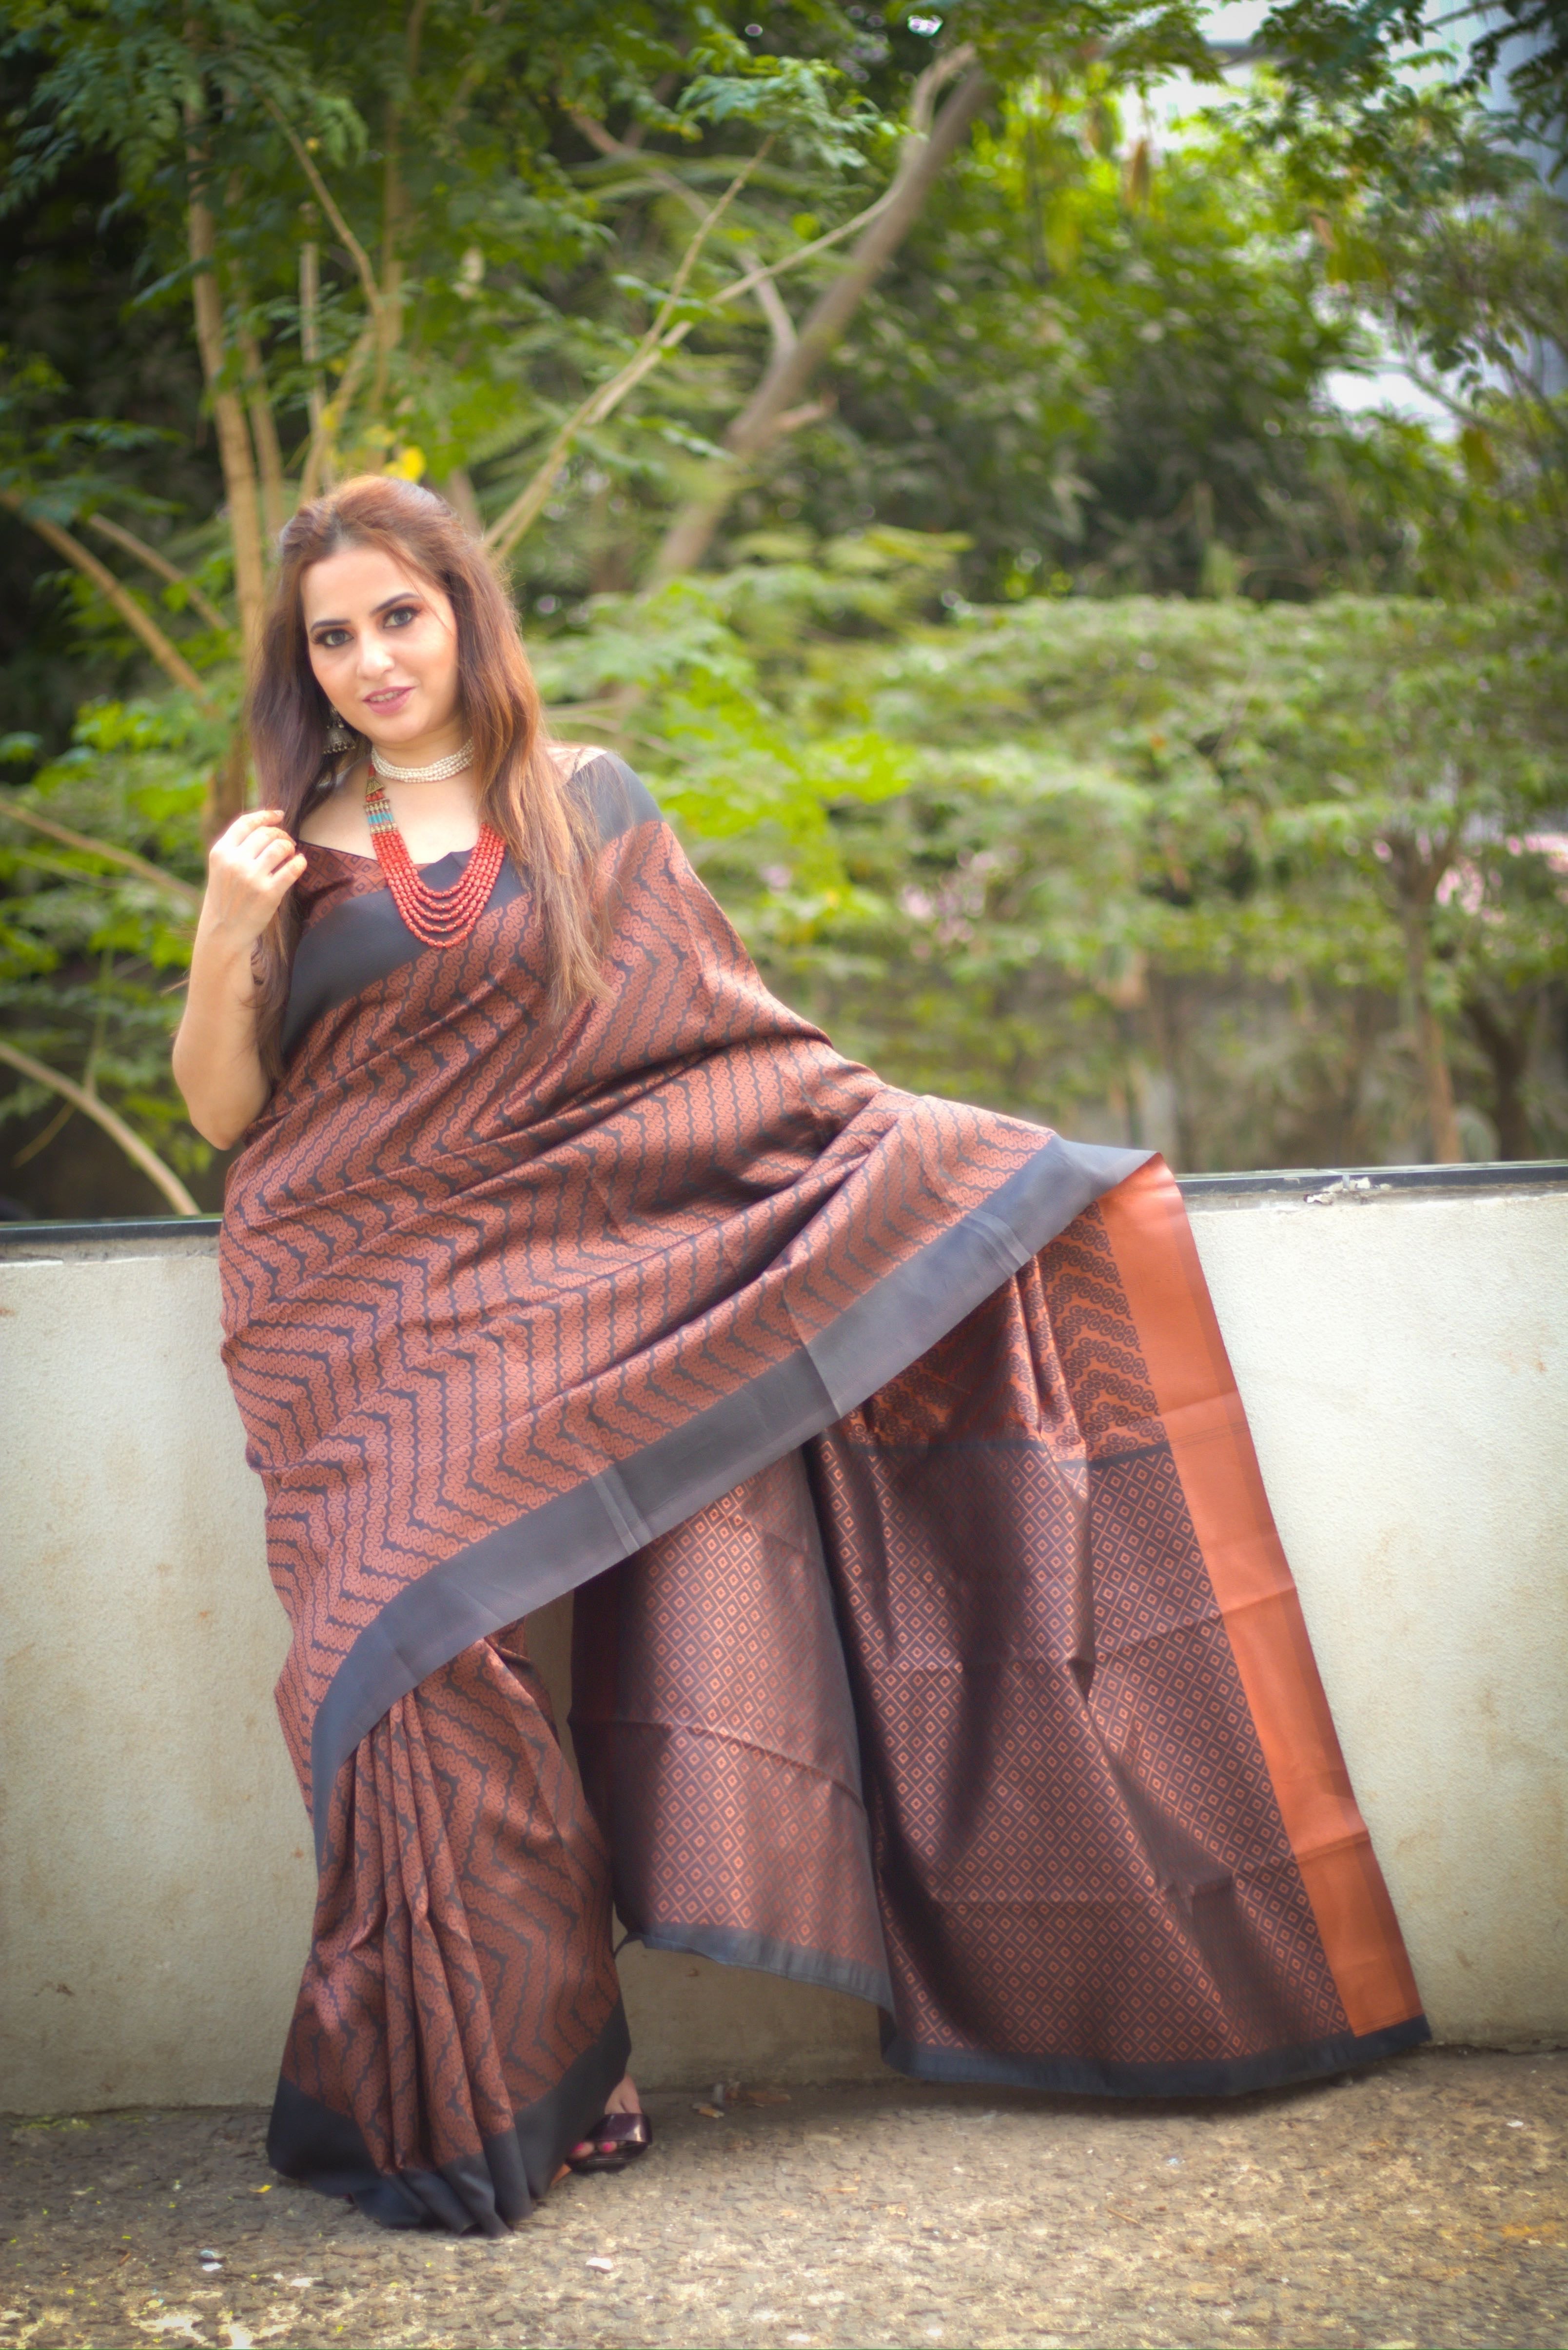 Creative art silk saree with intricate abstract design